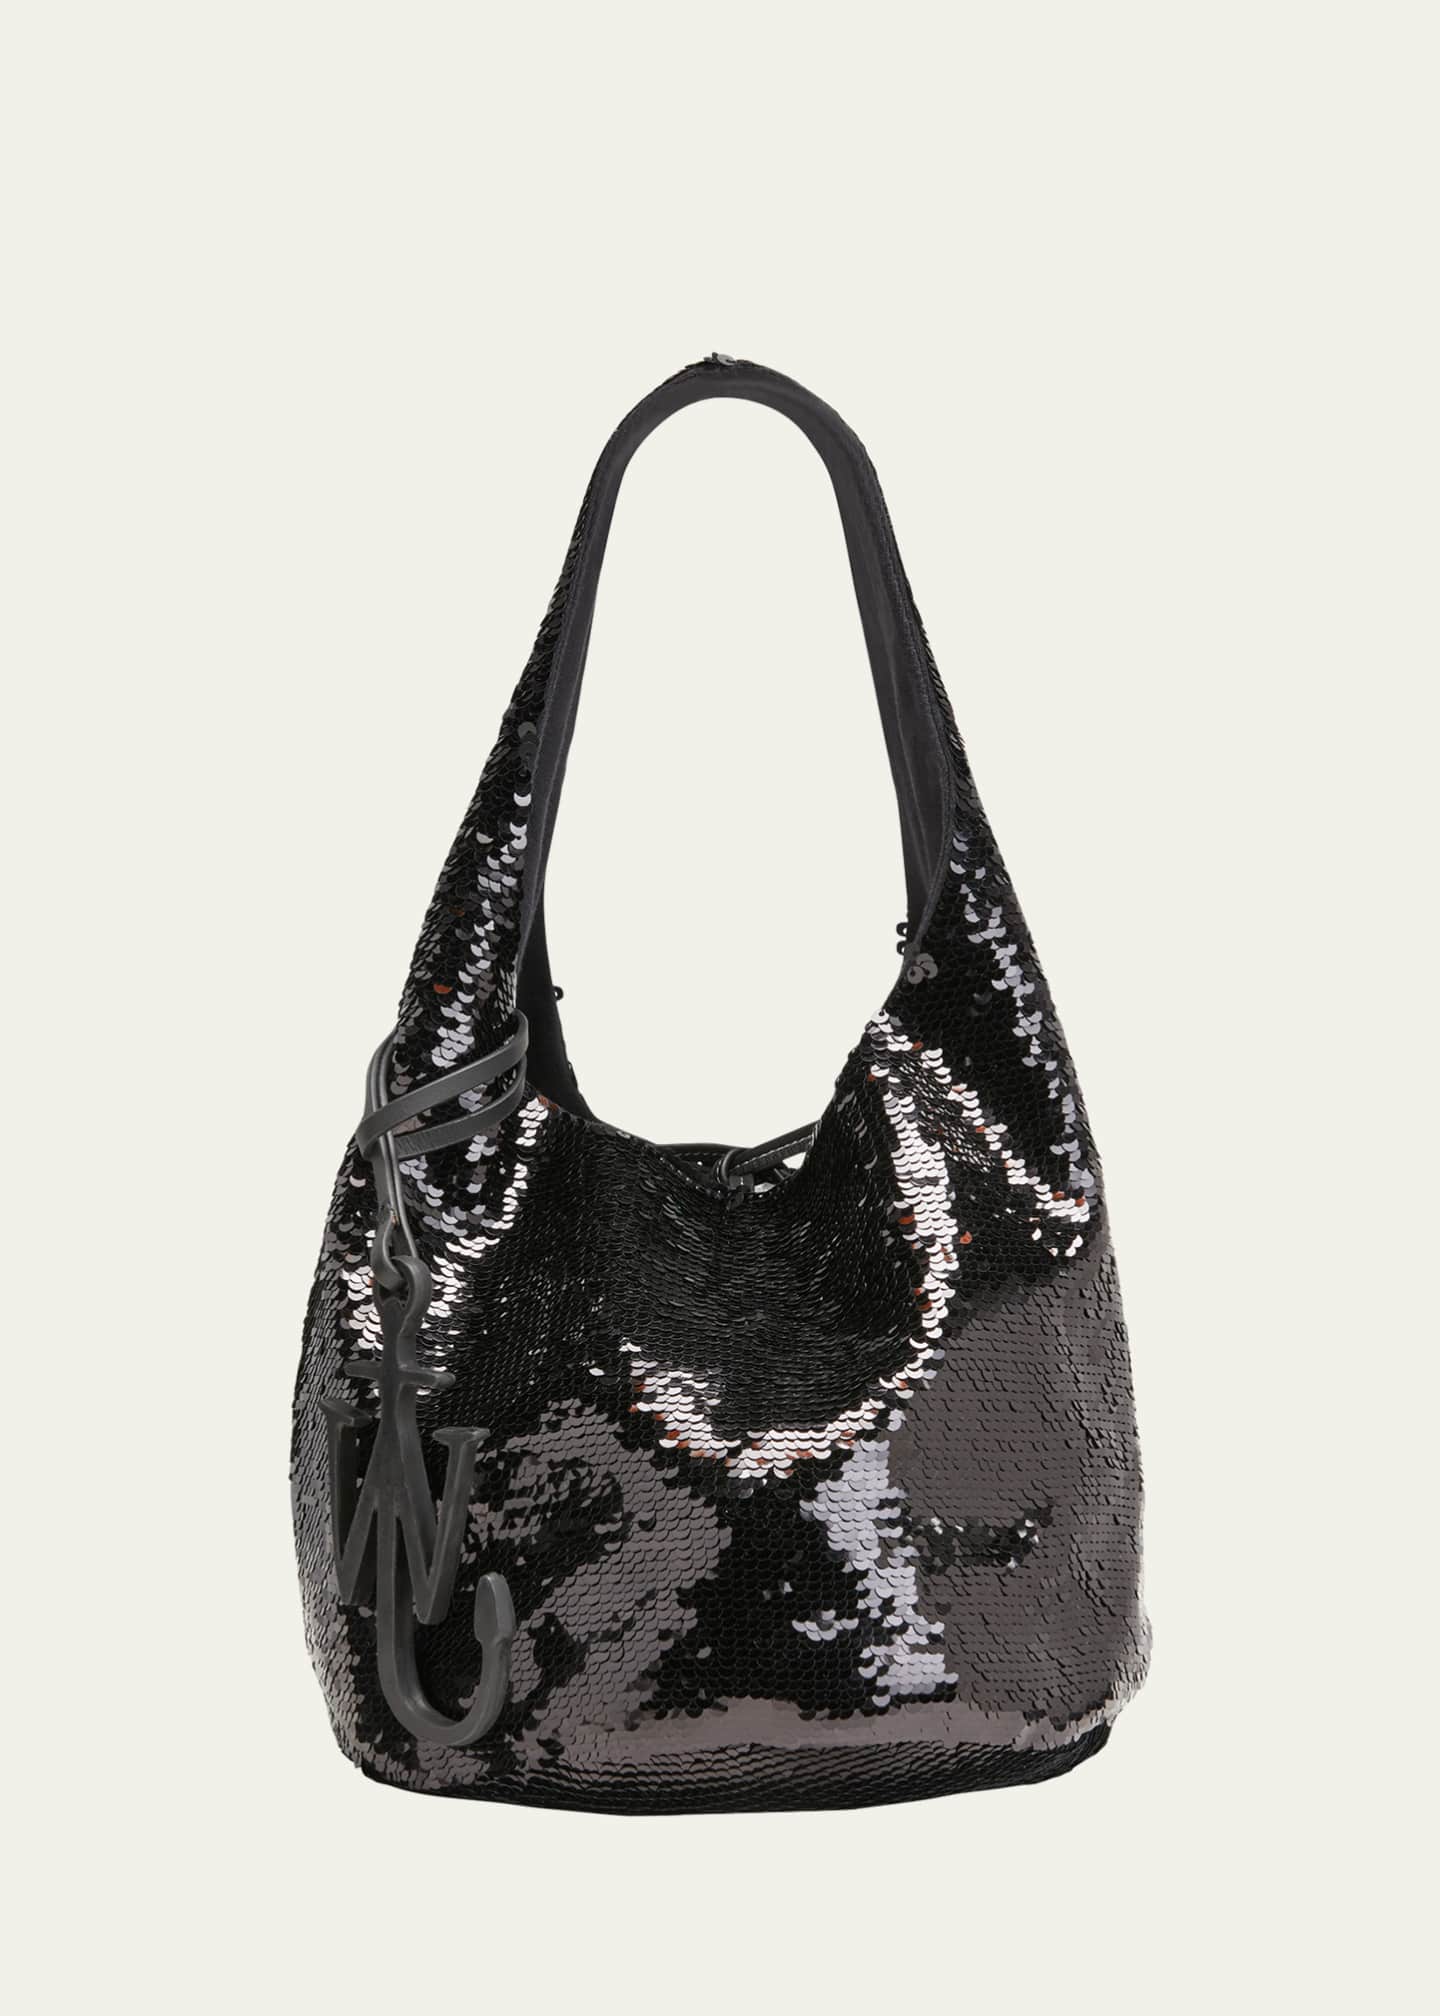 JW Anderson Mini Sequin Shopper Tote Bag, Black, Women's, Handbags & Purses Tote Bags & Totes